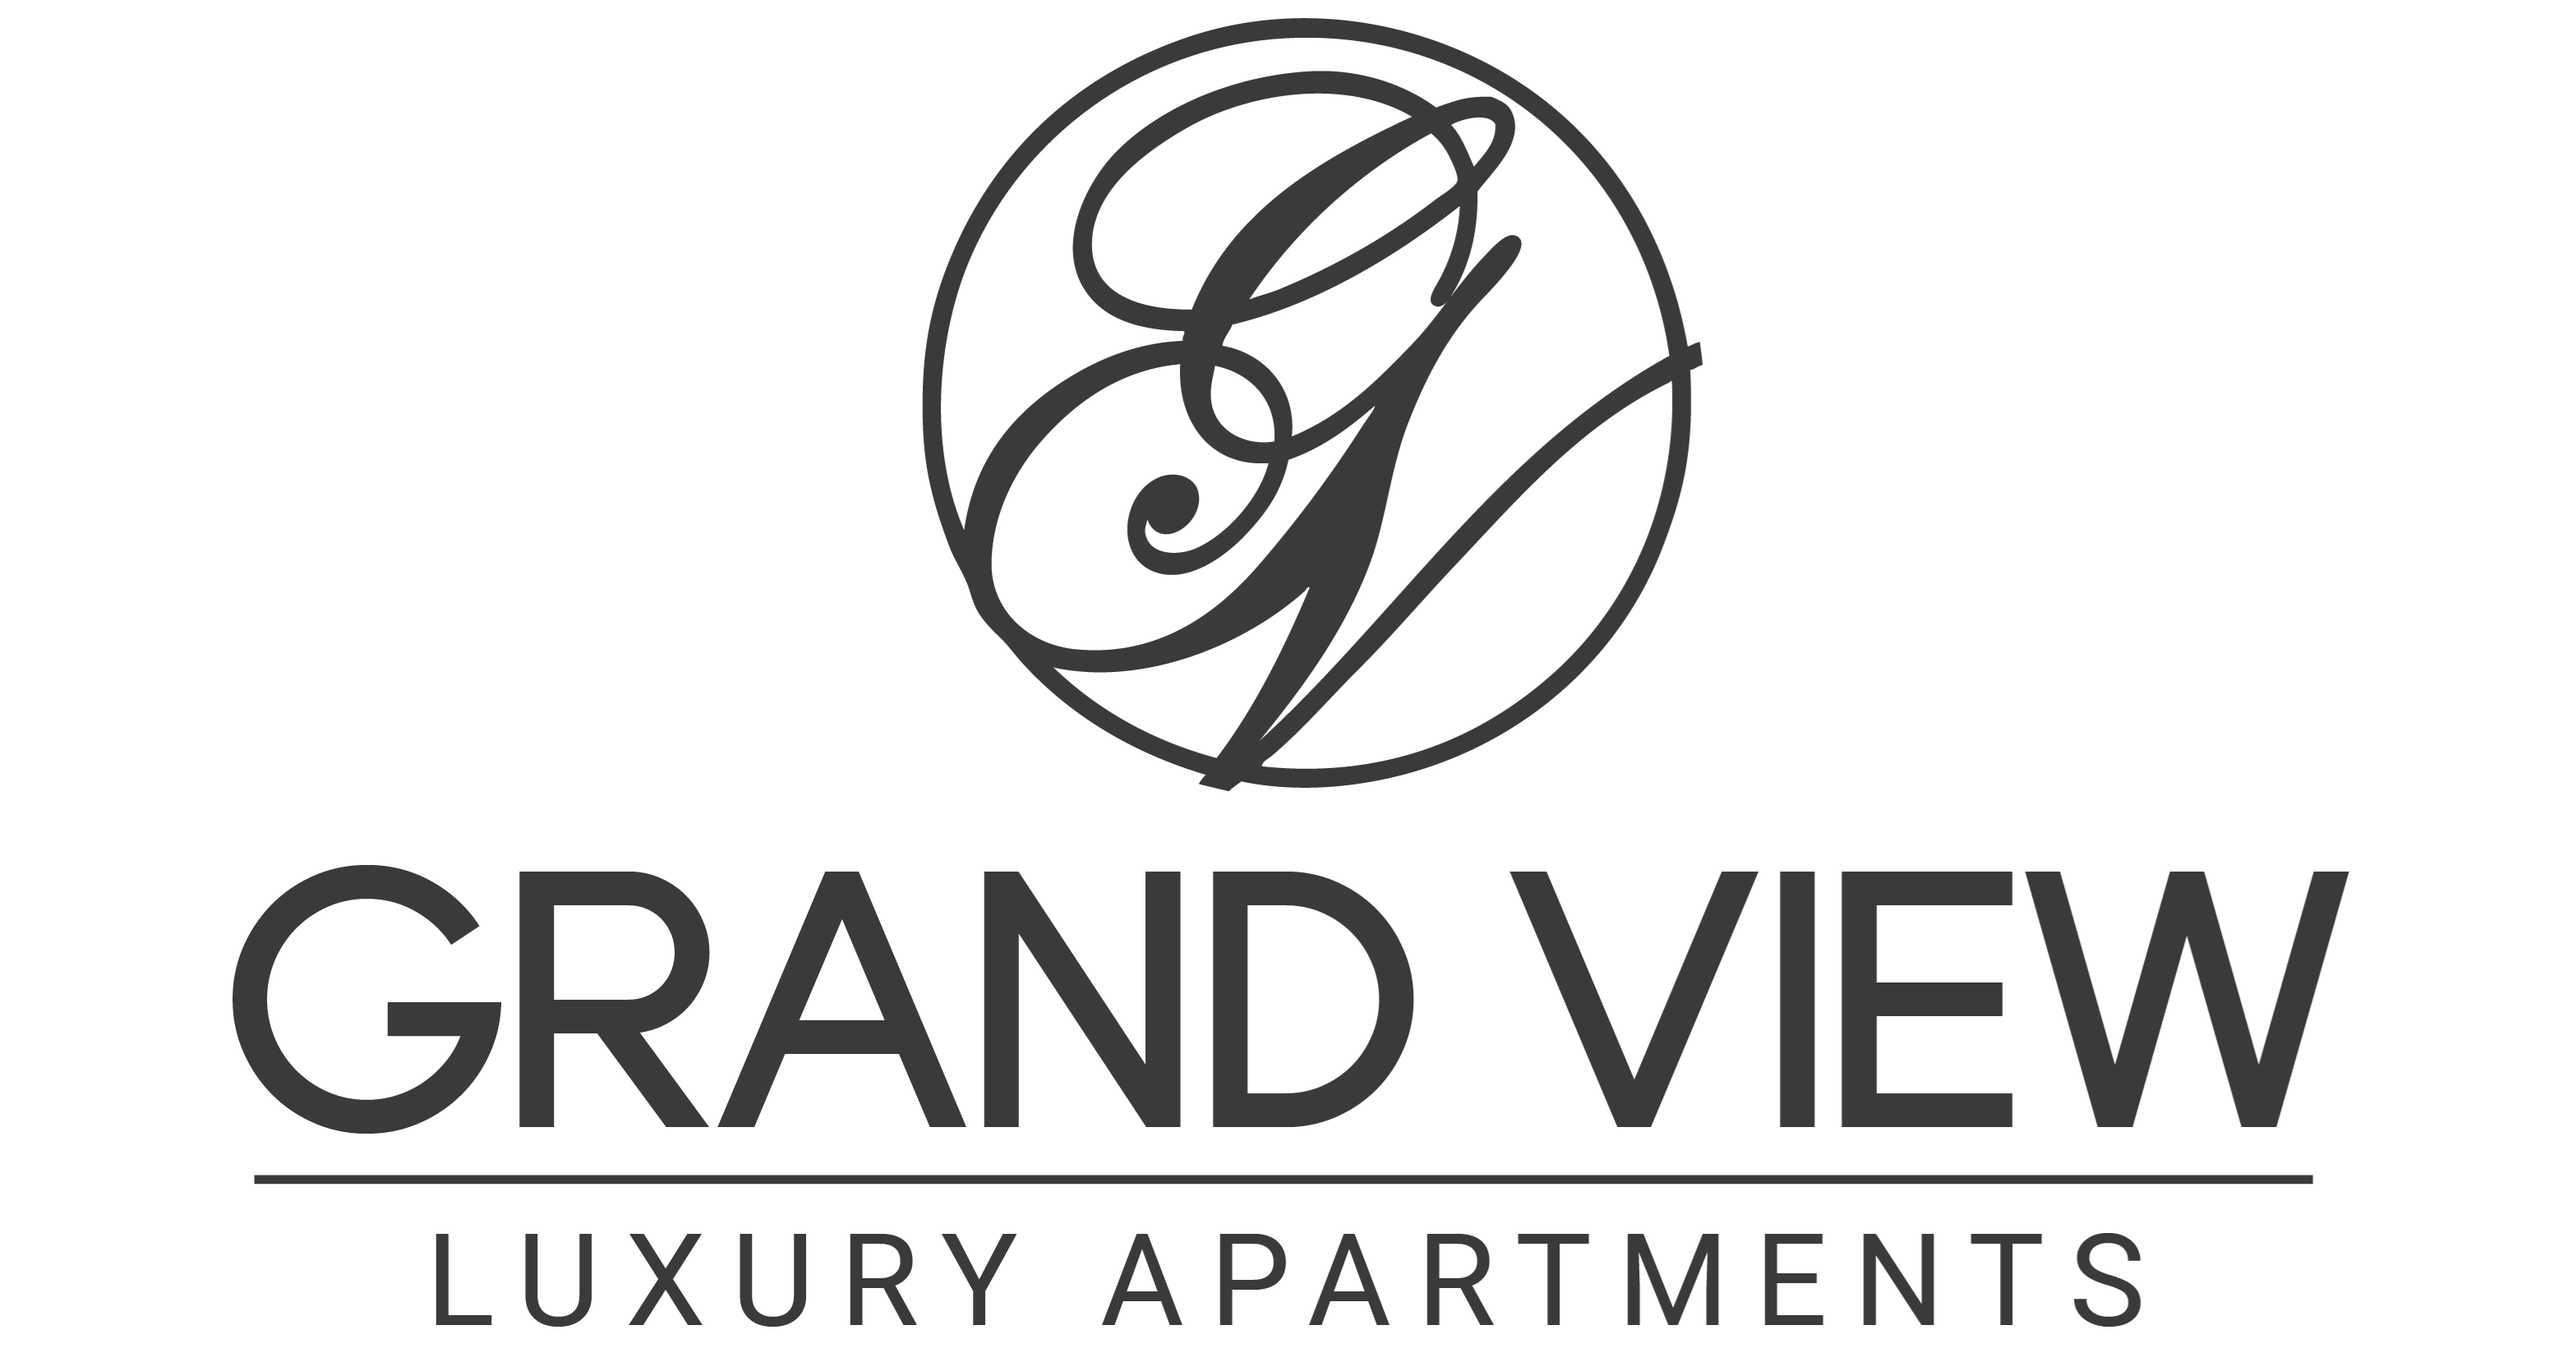 Luxury Apartment Logo - Grand View Luxury Apartments. Apartments in Wilmington, NC